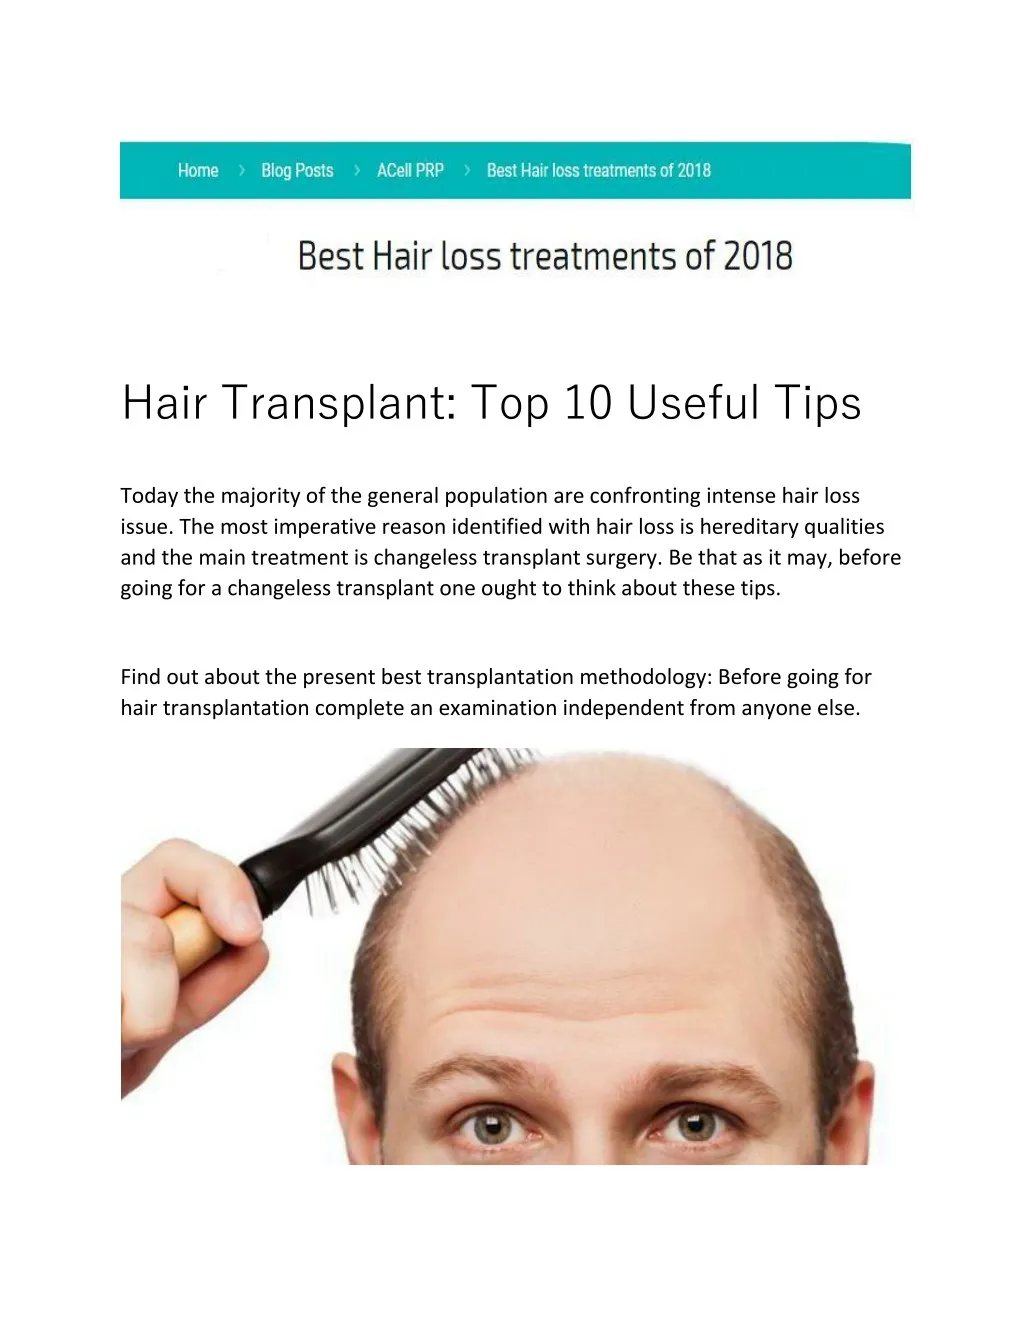 hair transplant top 10 useful tips